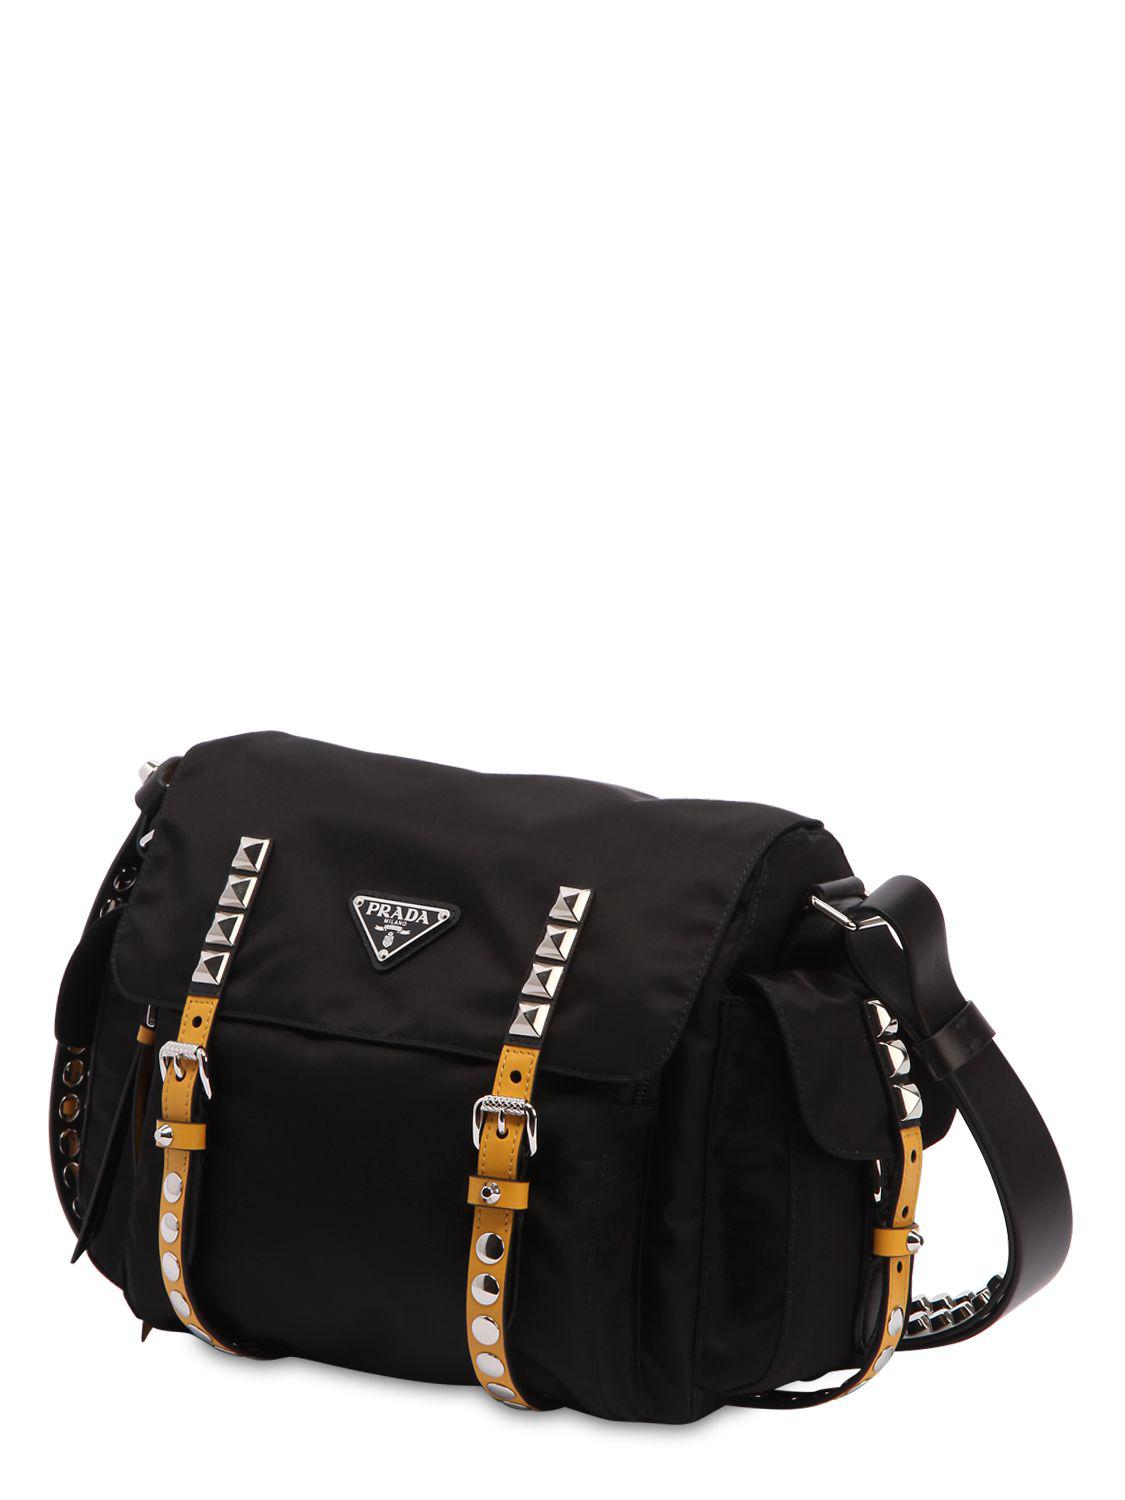 Prada Synthetic Studded Nylon Messenger Bag in Black/Yellow (Black) | Lyst